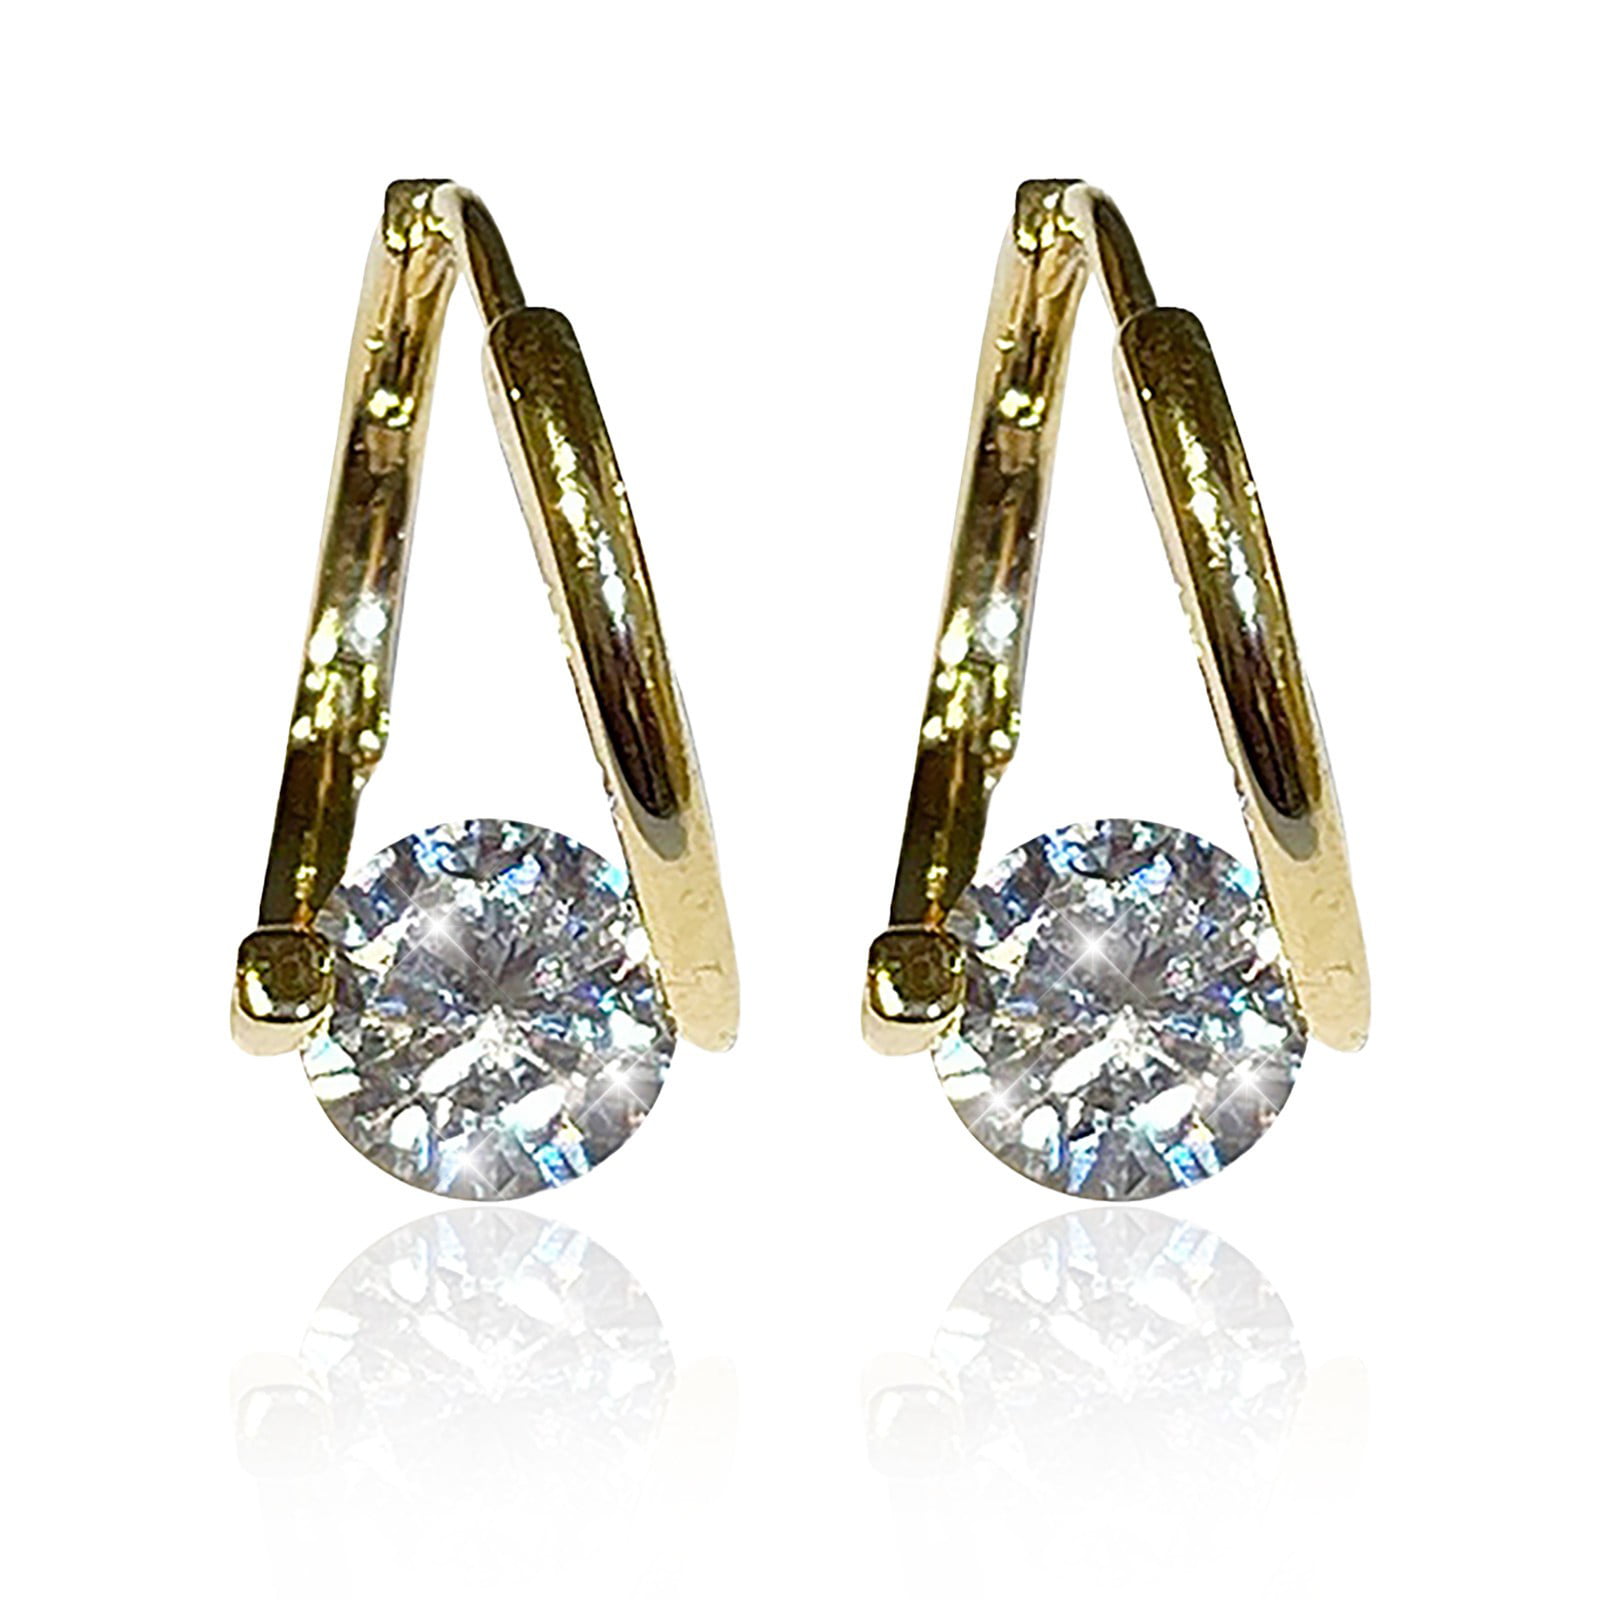 Color Lane Earrings American Diamond & Rhinestone Studded Dangler In Silver Tone For Women/Girls